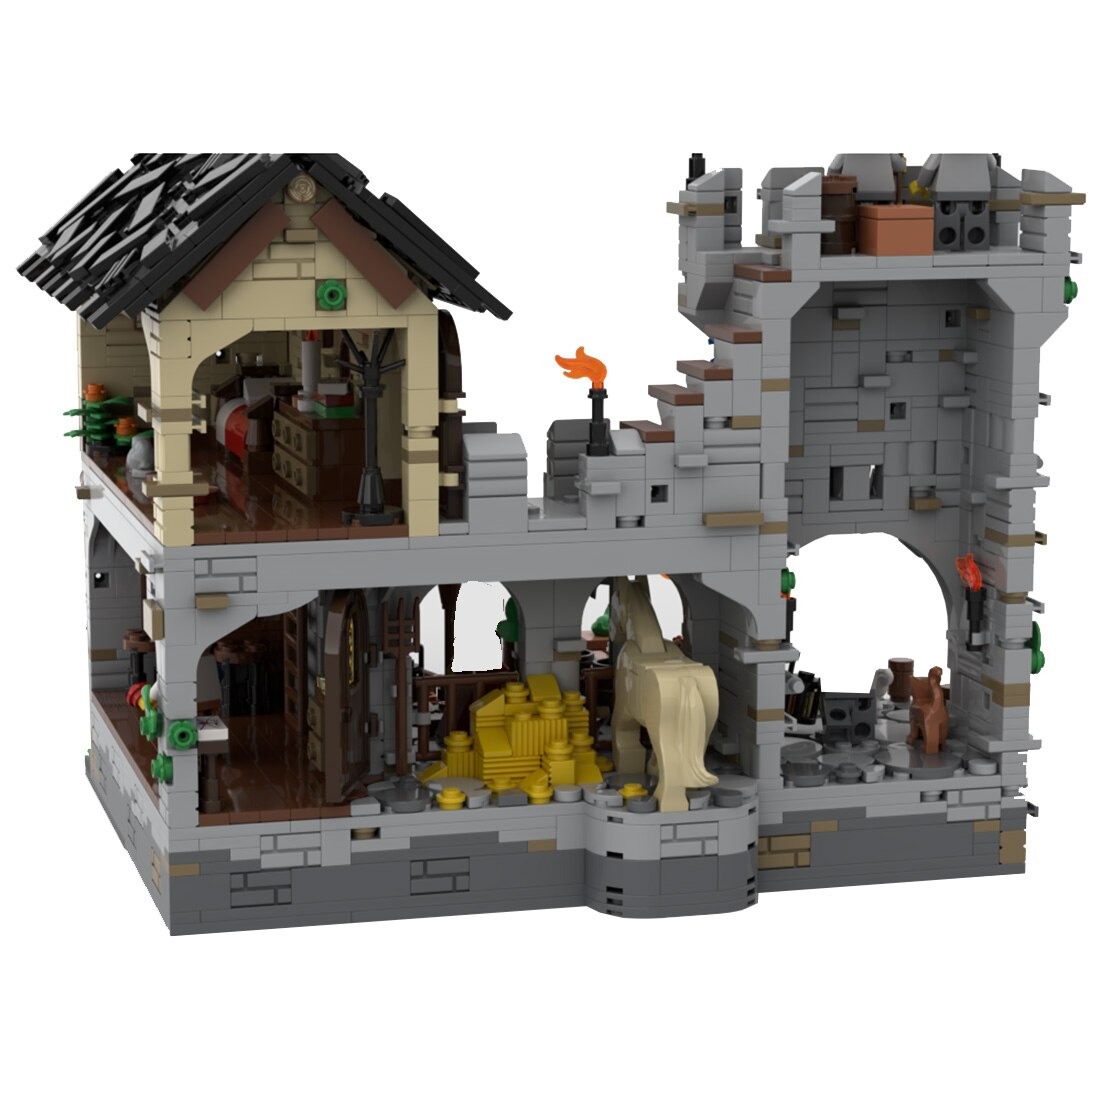 MOC-124794 Medieval Harbor Castle With 2053 Pieces